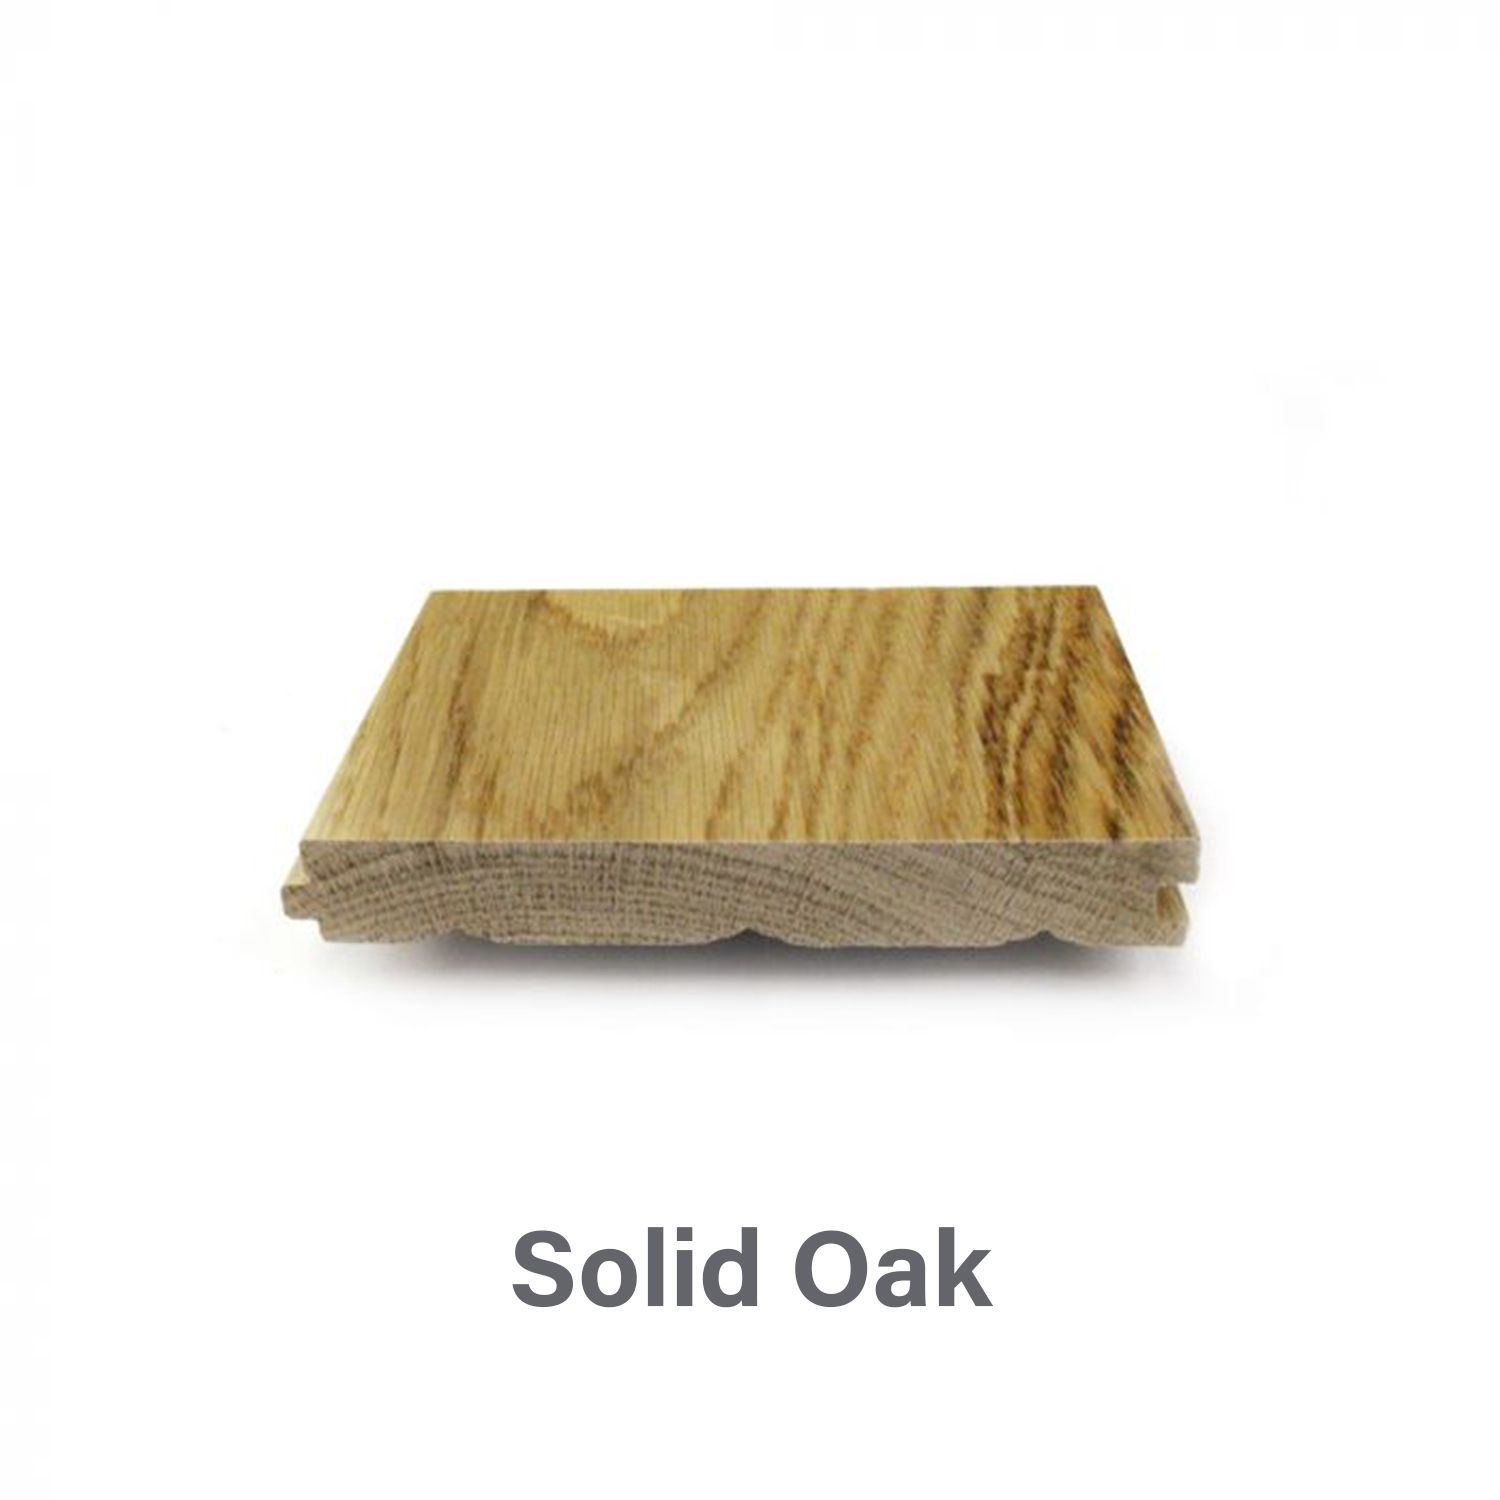 Solid or engineered wooden flooring?